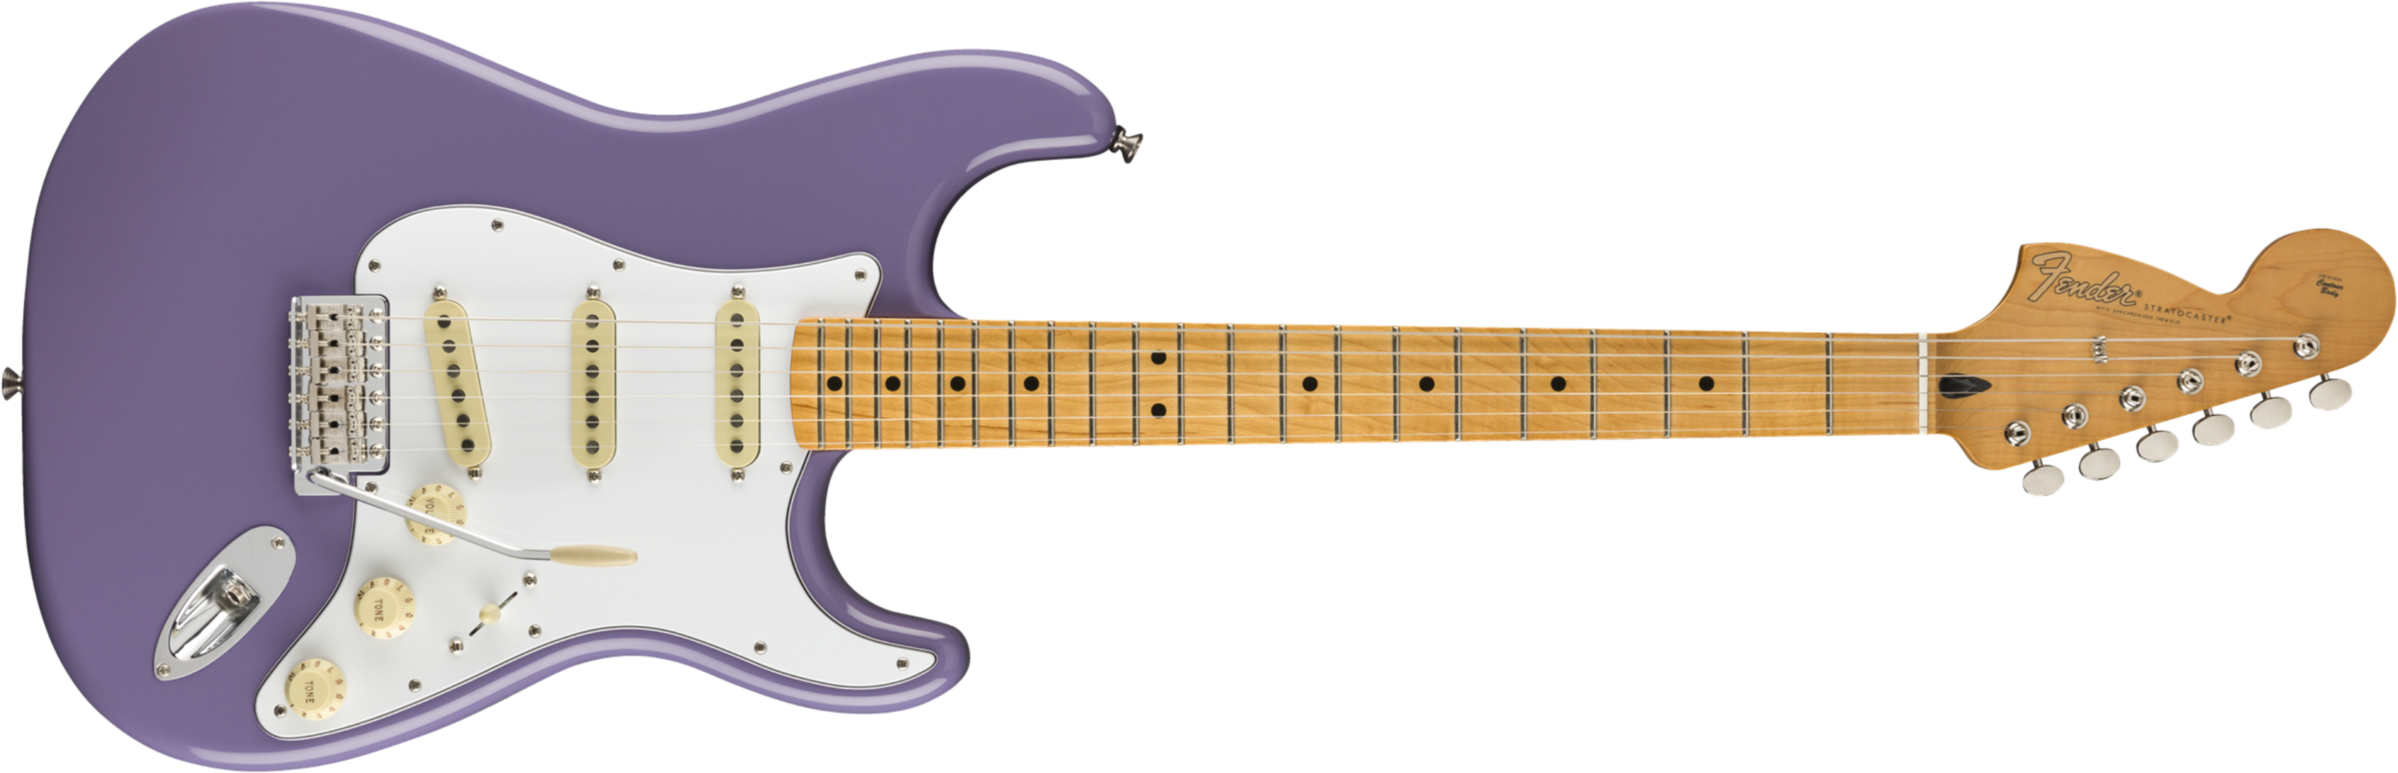 Fender Jimi Hendrix Strat Signature 2018 Mn - Ultra Violet - Str shape electric guitar - Main picture